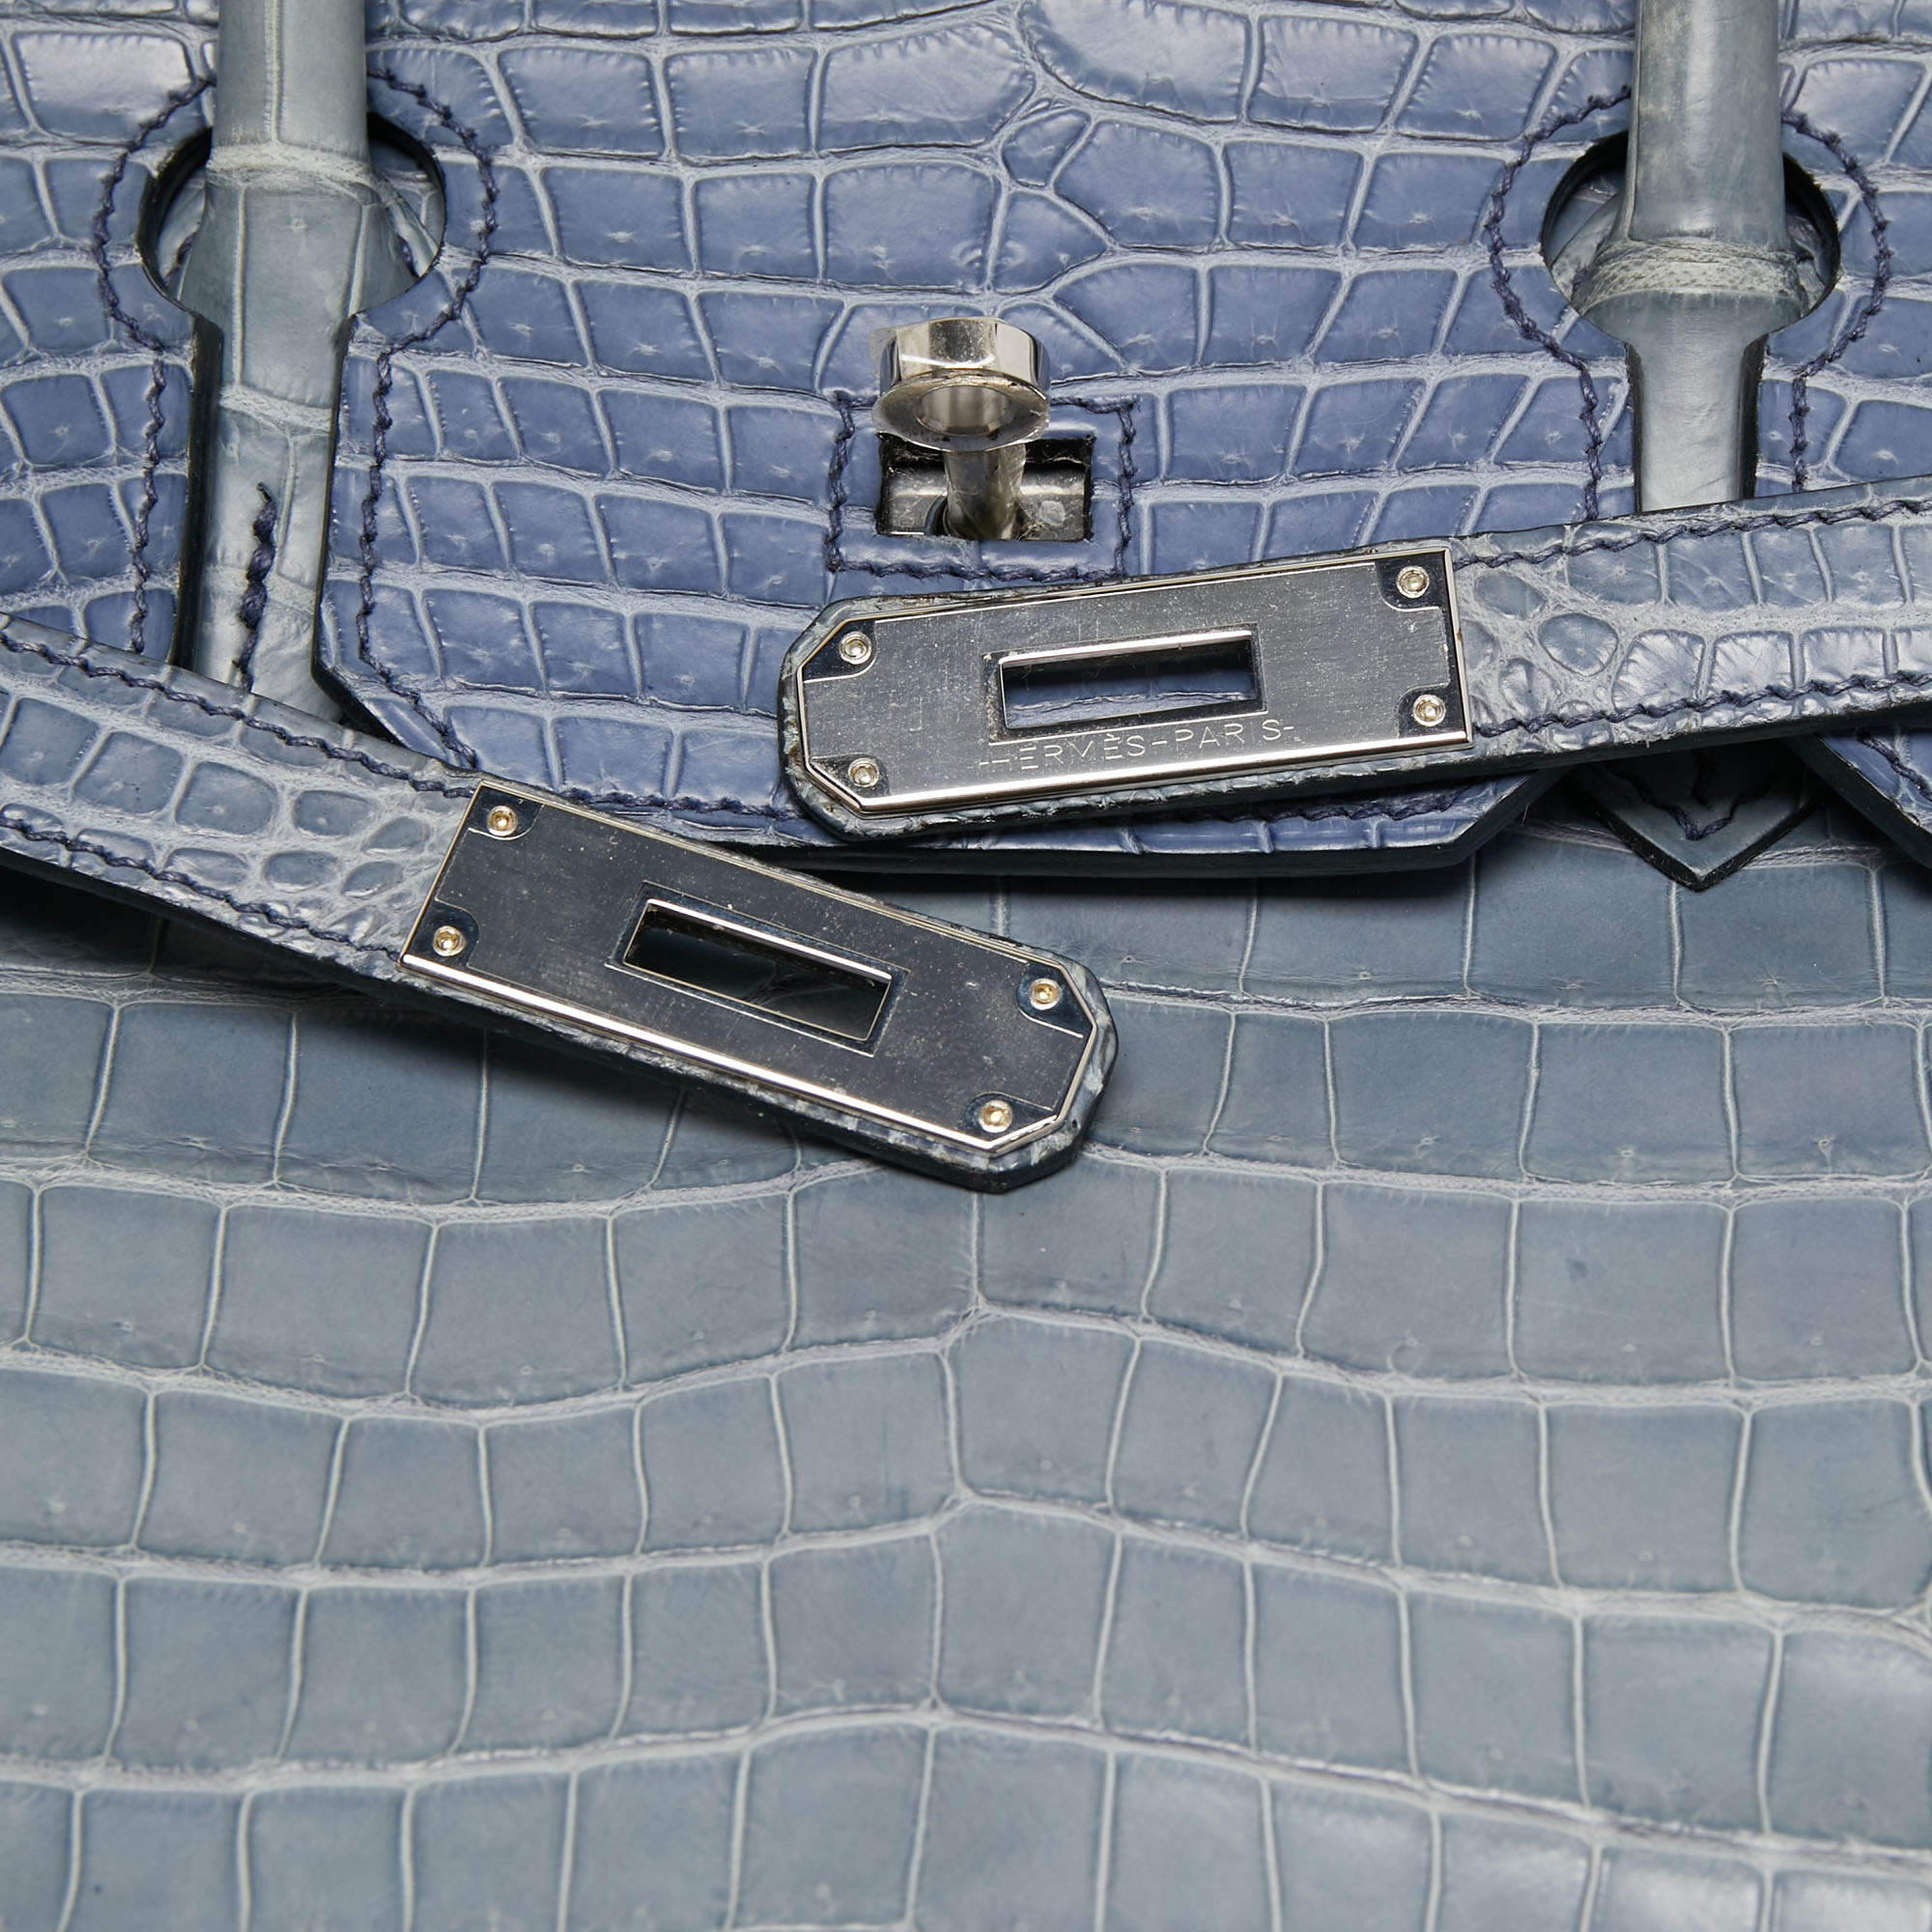 Hermès Birkin 35 Bleu Brighton Porosus Crocodile Palladium Hardware